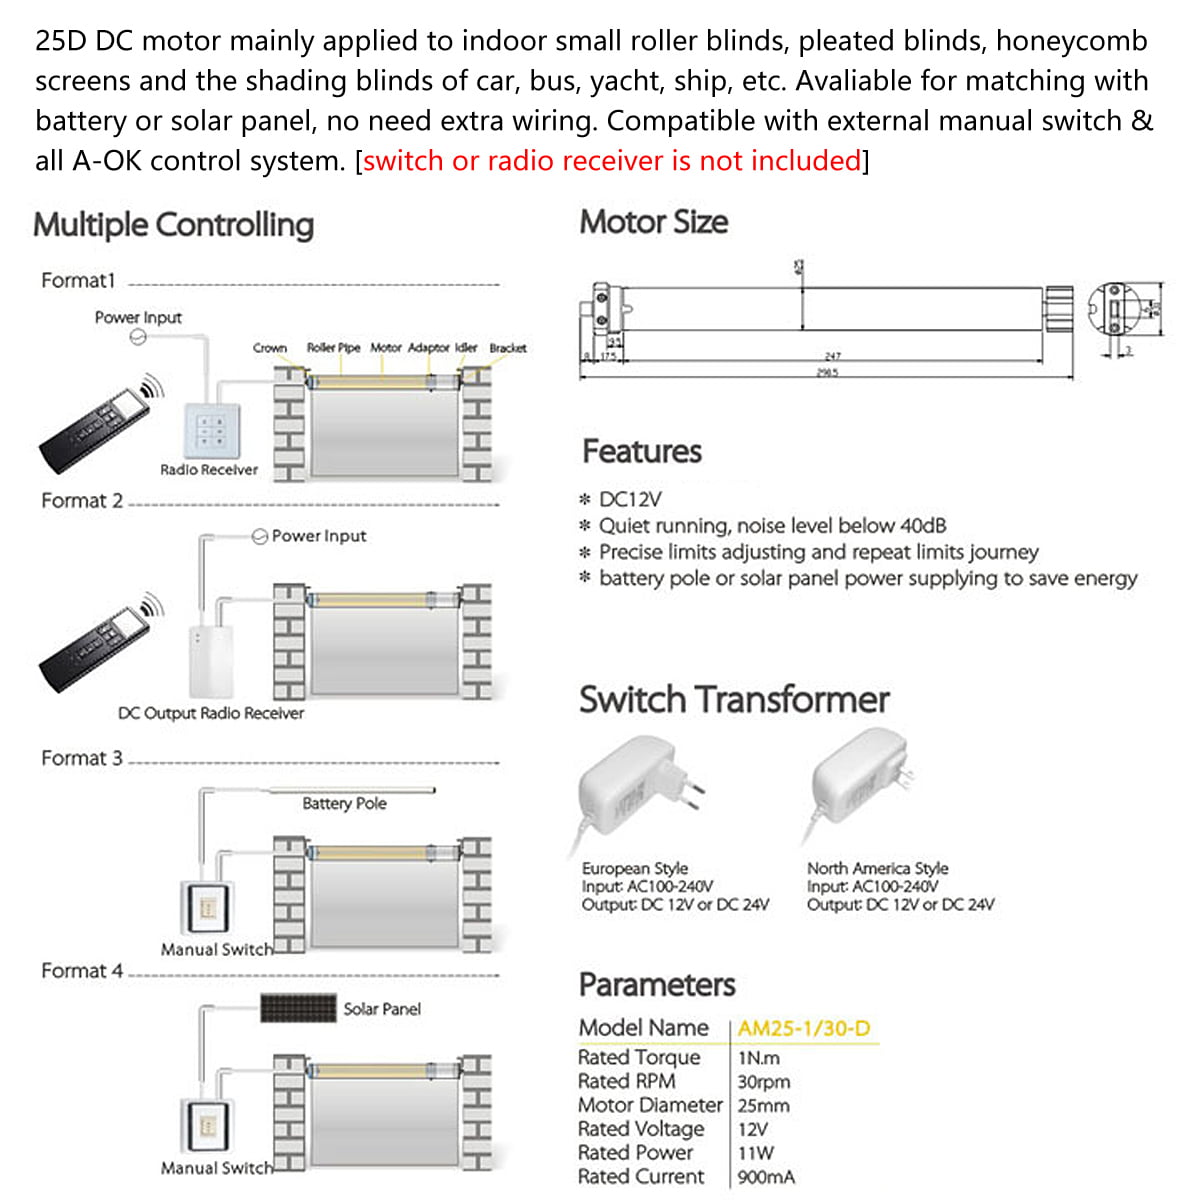 Ac100-240 diy electric roller blind/shade tubular motor kit & remote controller 